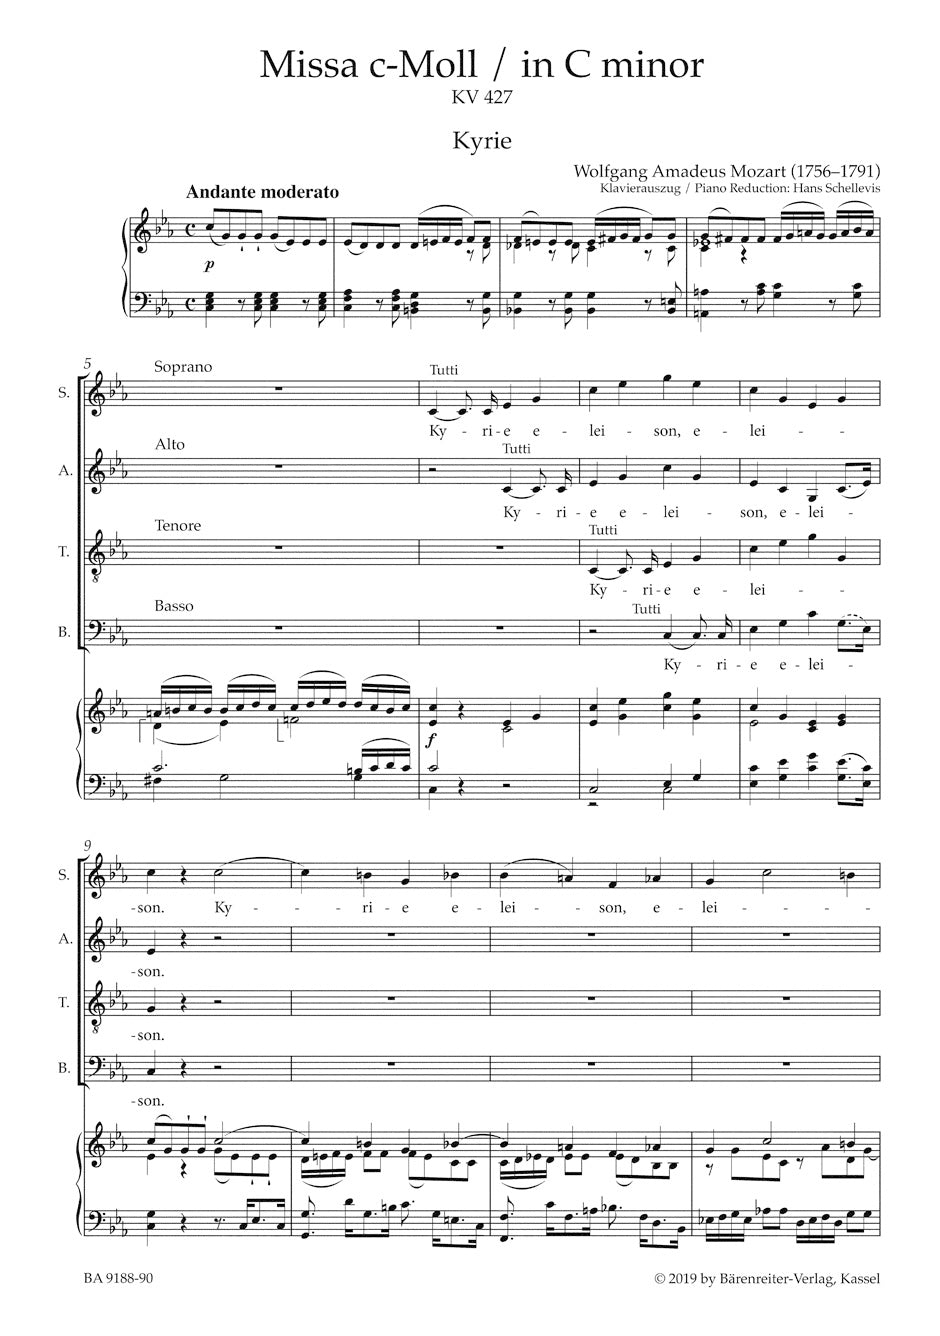 Mozart Mass in C minor K427 "Great Mass in C minor"